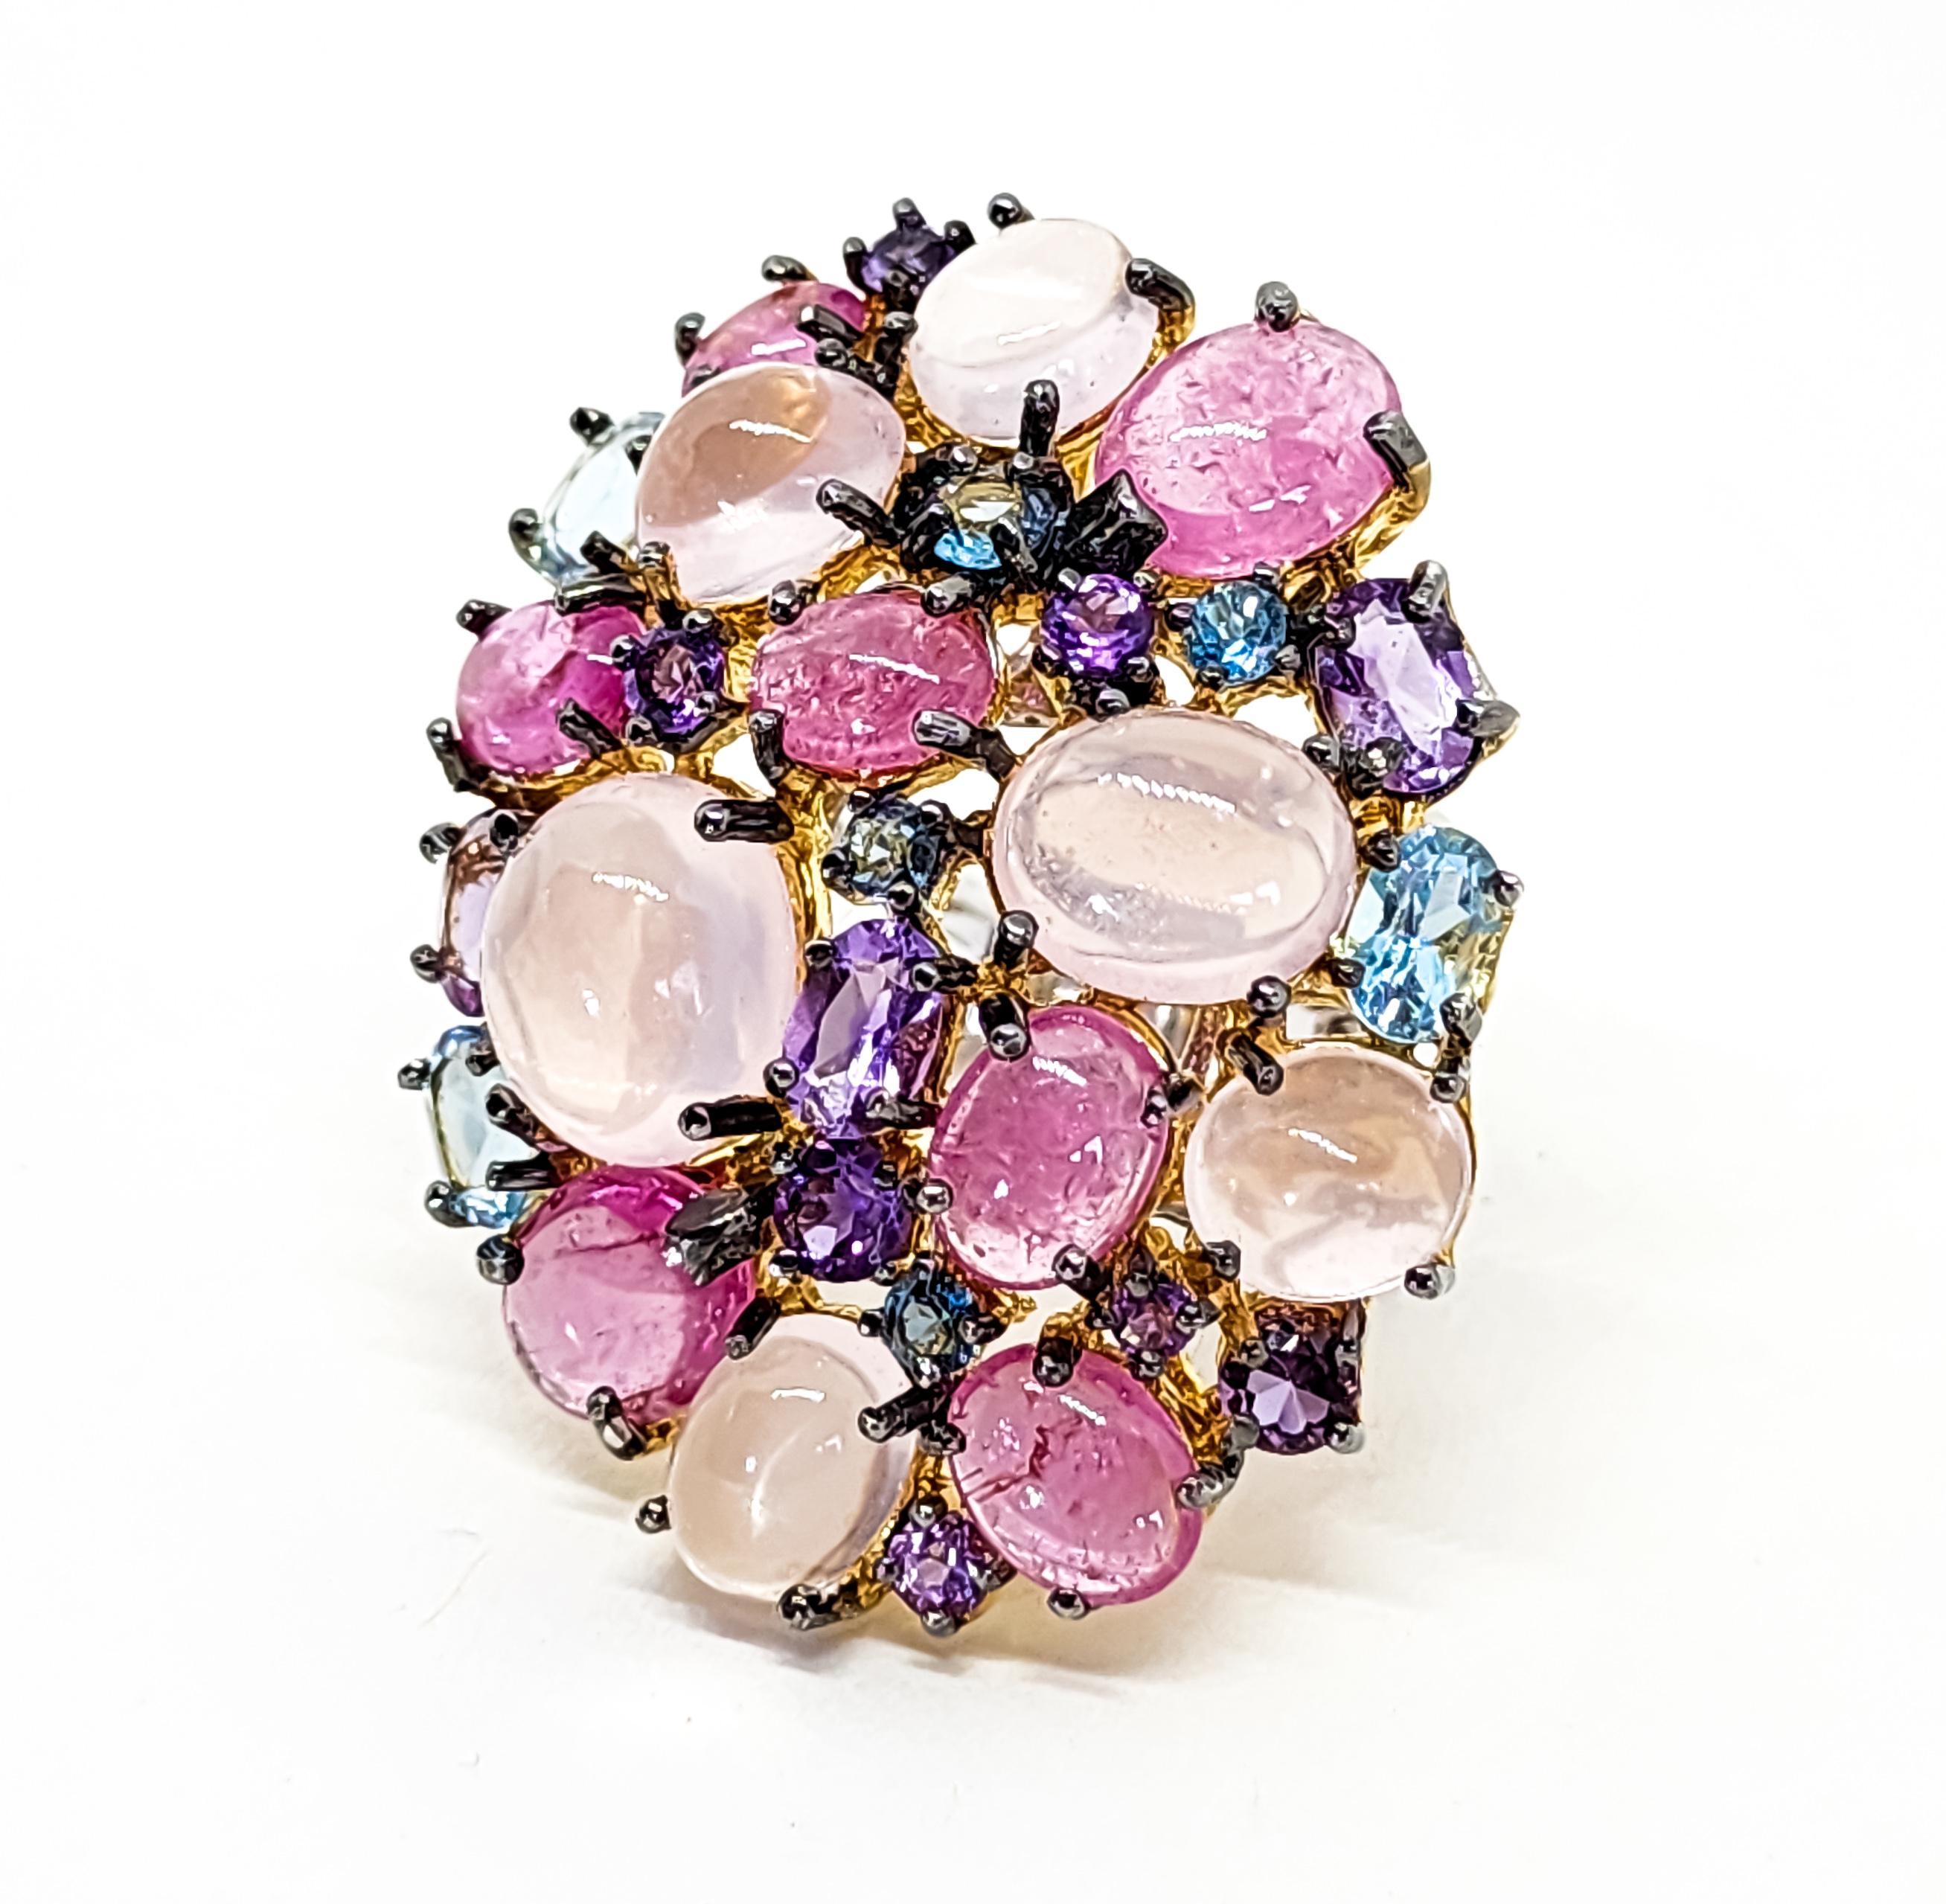  31 Carat Multi Gemstone Statement Cocktail Ring Pink Blue Purple Gems Silver For Sale 4